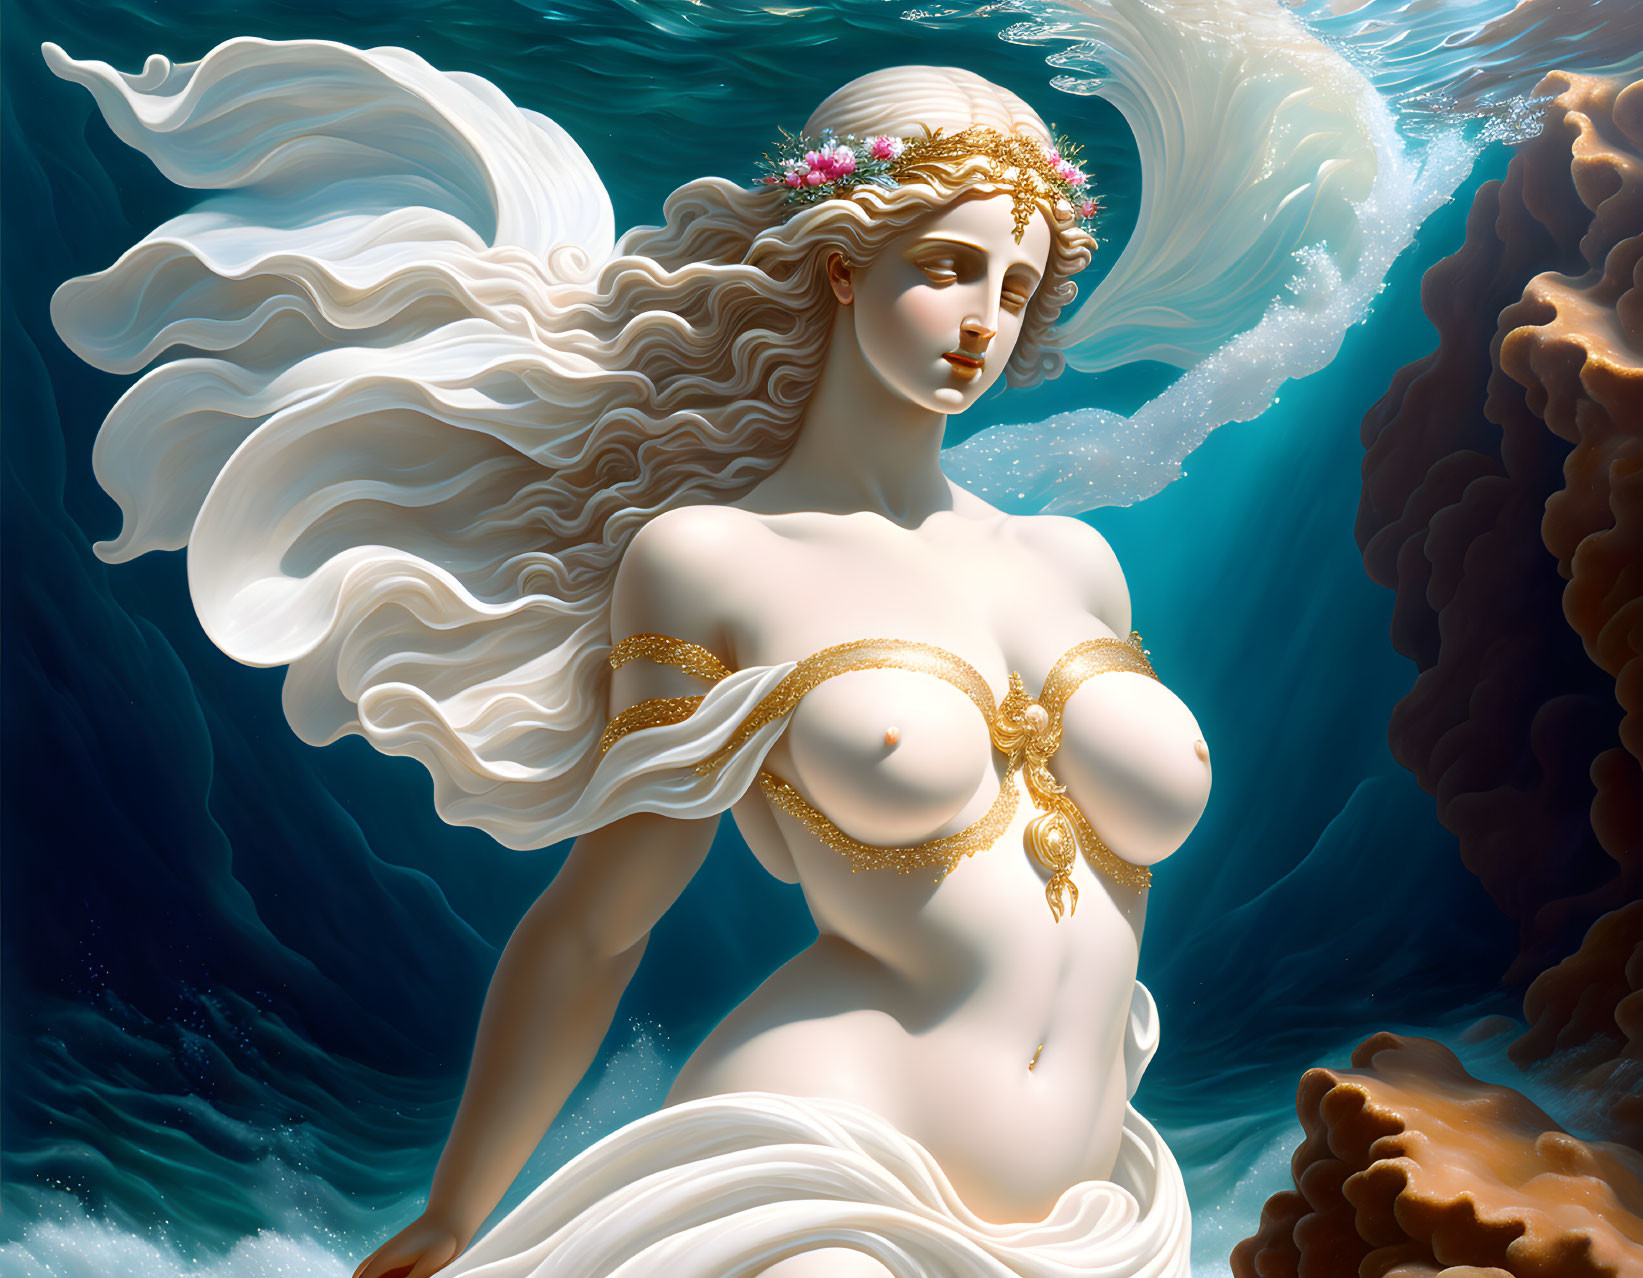 Aphrodite, the goddess of beauty